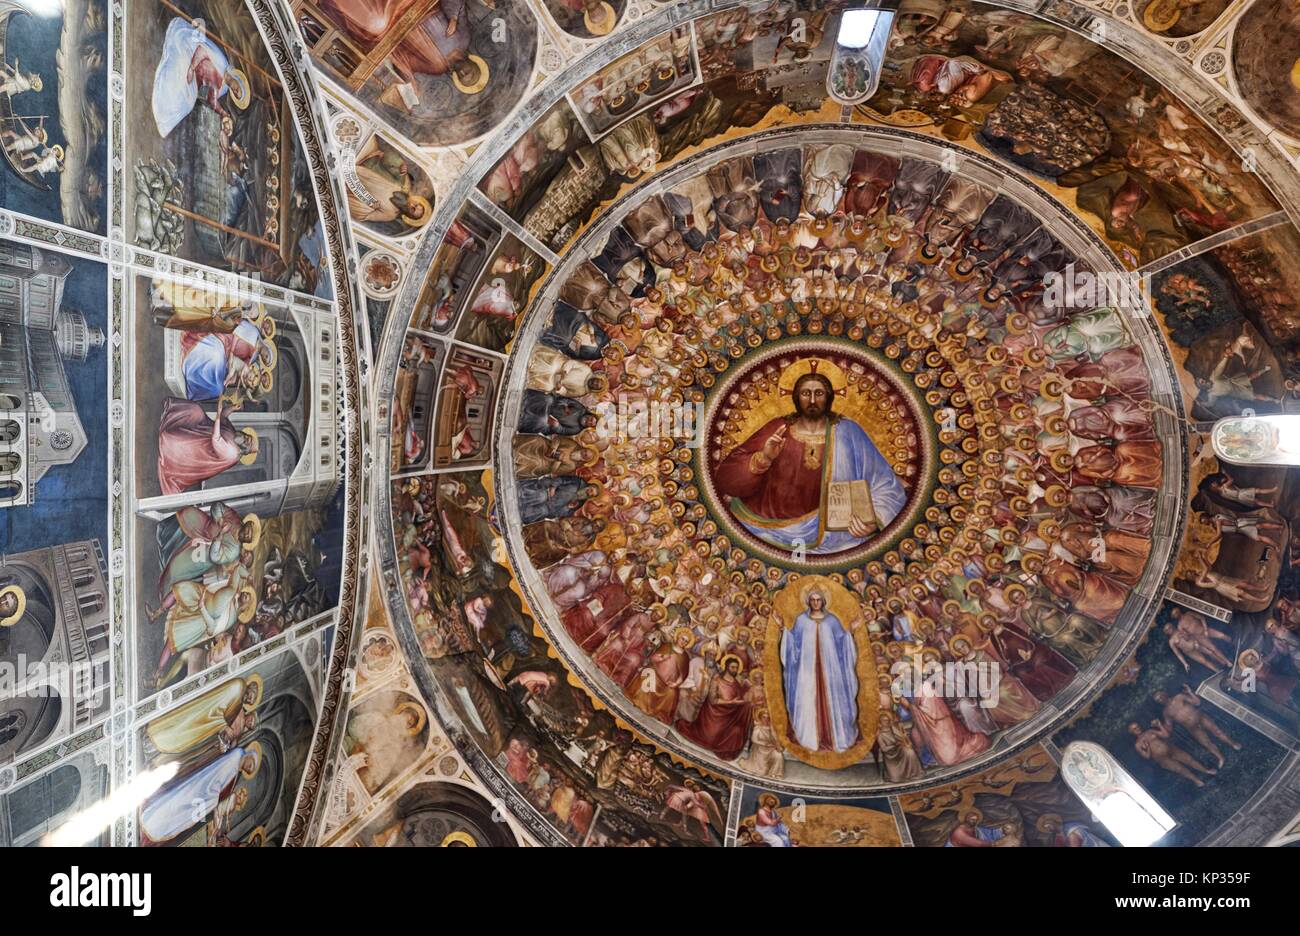 Die Innenräume der Taufkapelle Padua, Venetien, Italien Padua Baptisterium, St. Johannes der Täufer, ist eine religiöse Gebäude auf gefunden Stockfoto